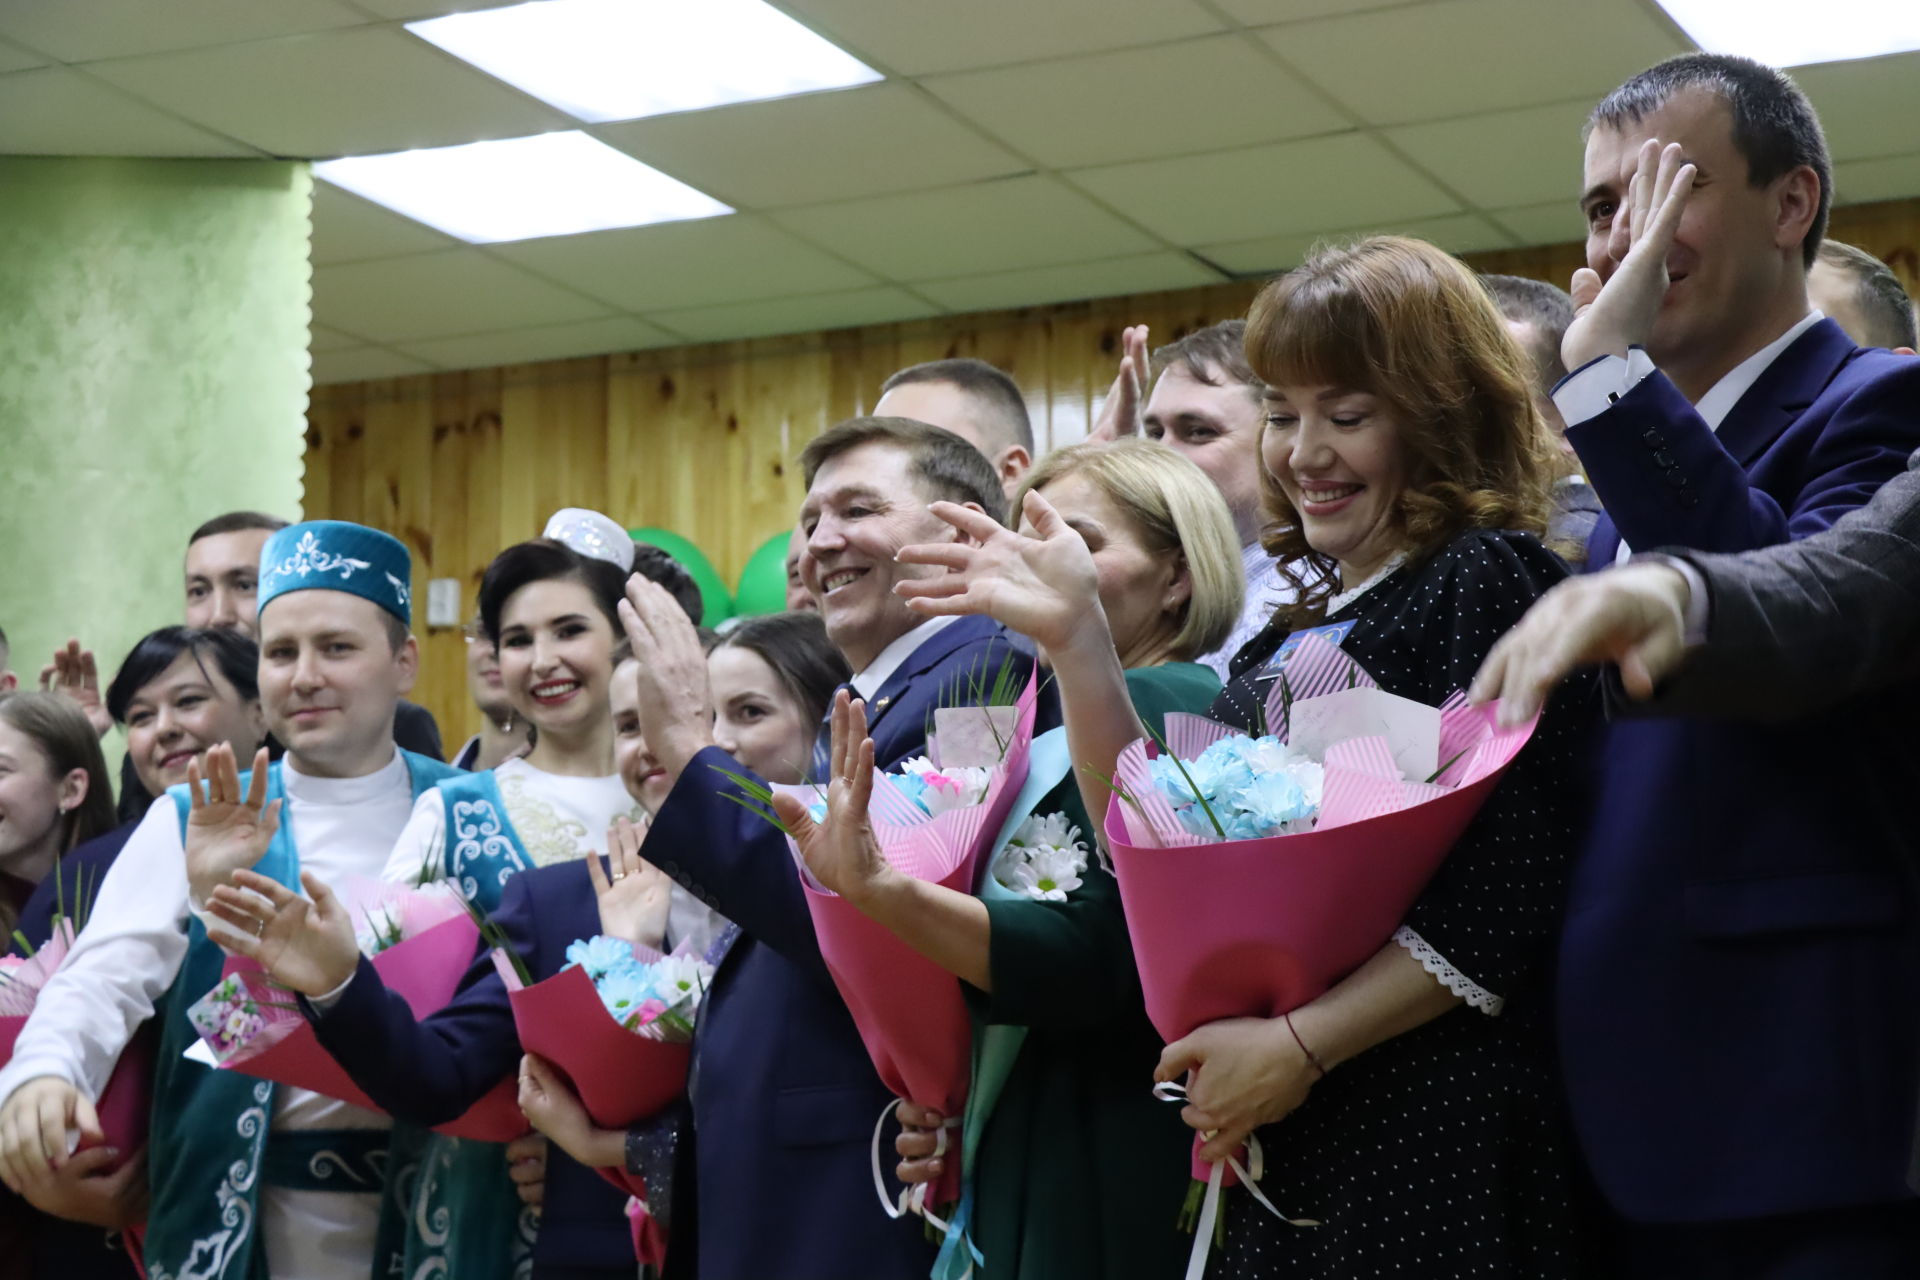 Саба муниципаль районы Советы һәм башкарма комитеты хезмәткәрләре, ветераннары "Жырлыйк әле" шоу-проектында көч сынашты